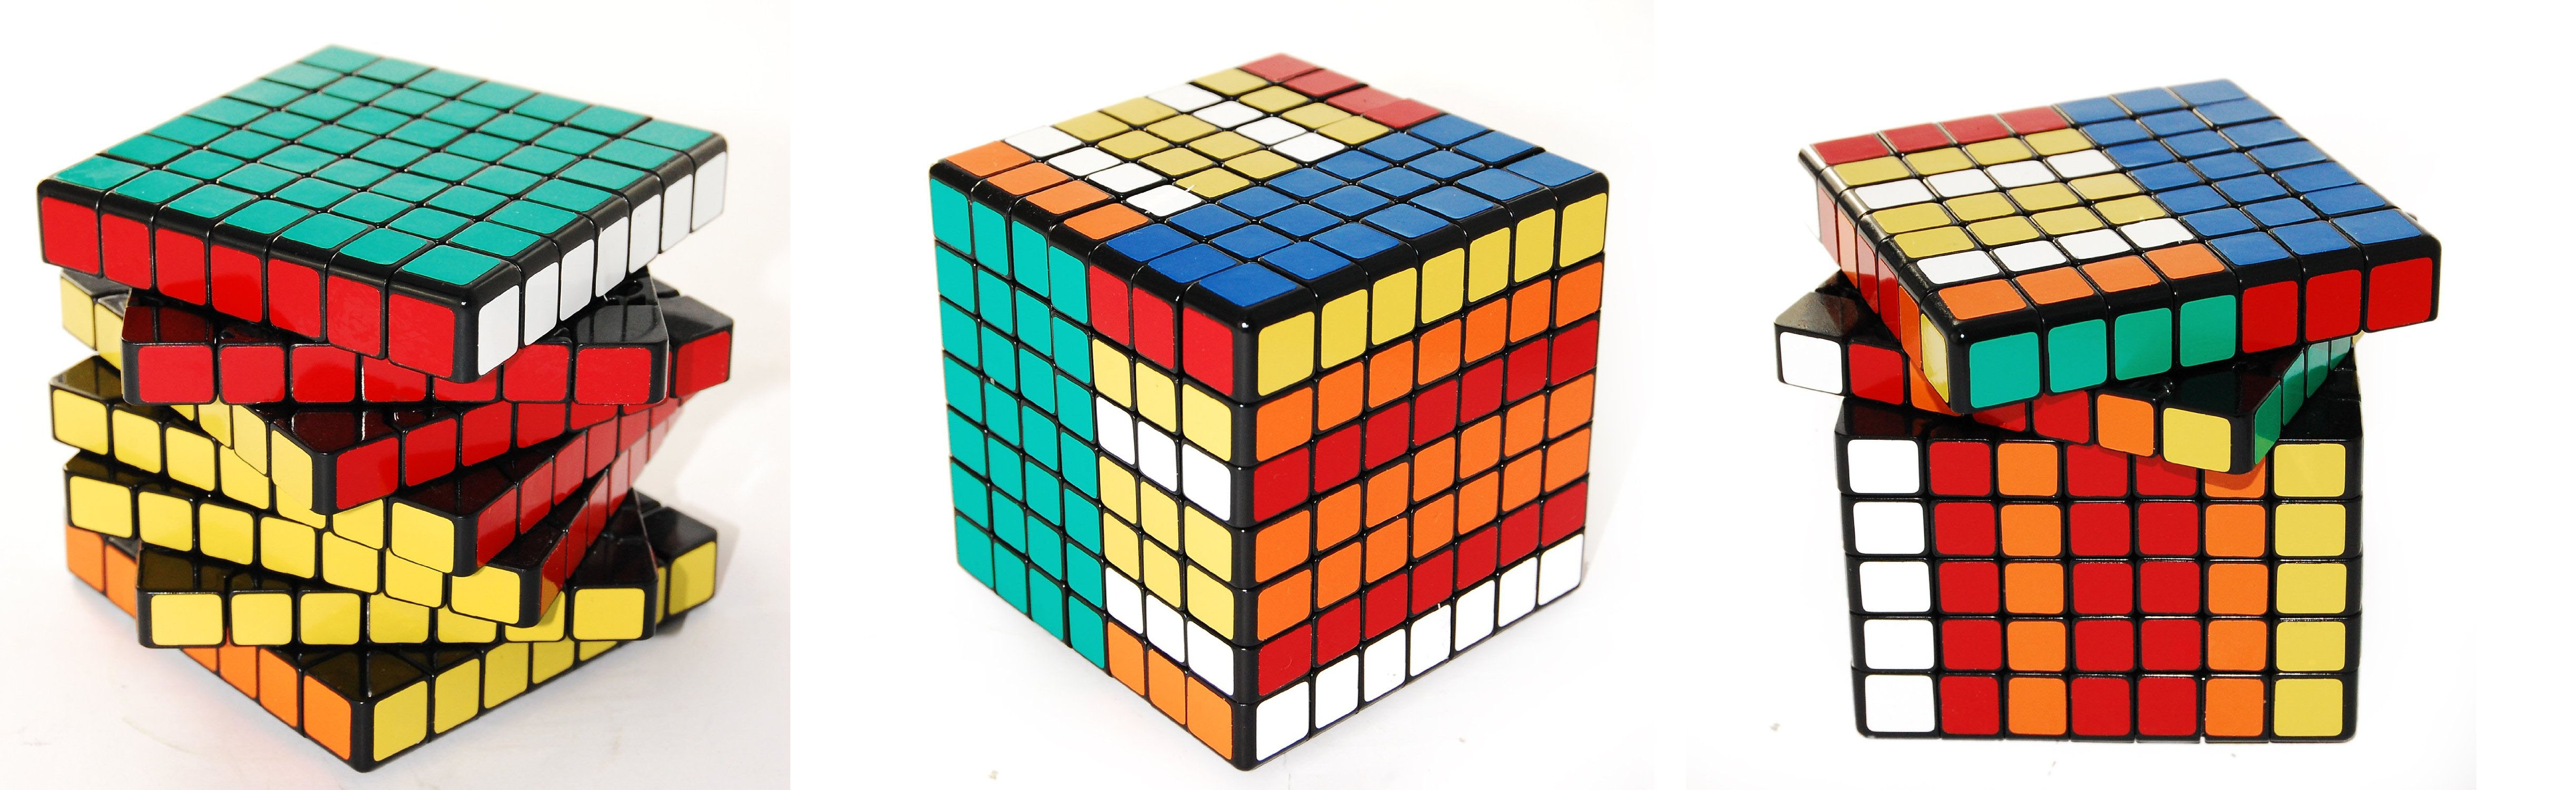 7X7 Rubik's Cube Type Puzzles